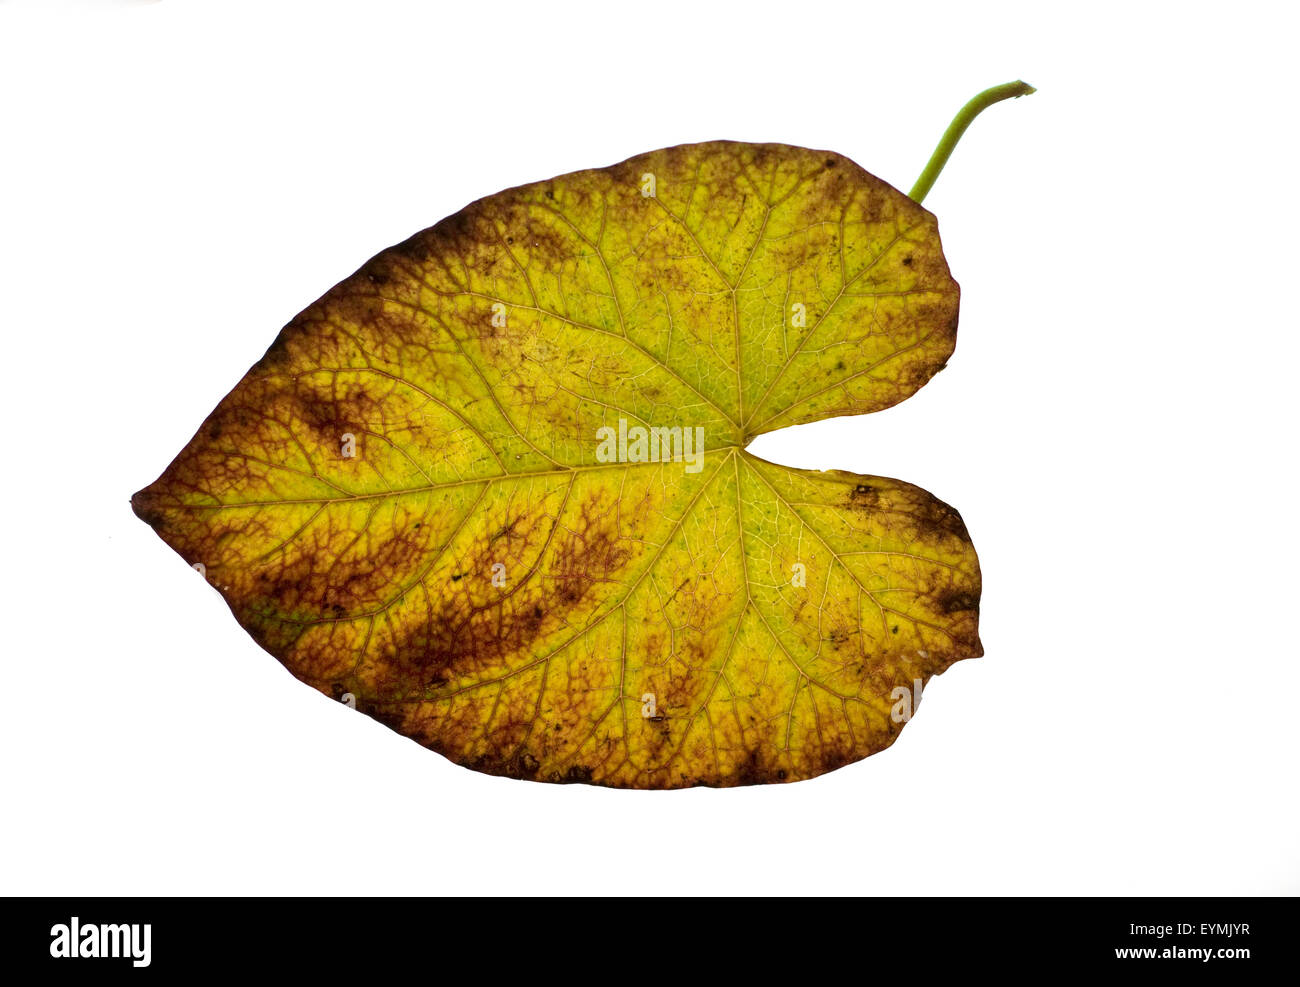 Zaunwinde, Convolvulus, Herbstfaerbung, Stock Photo